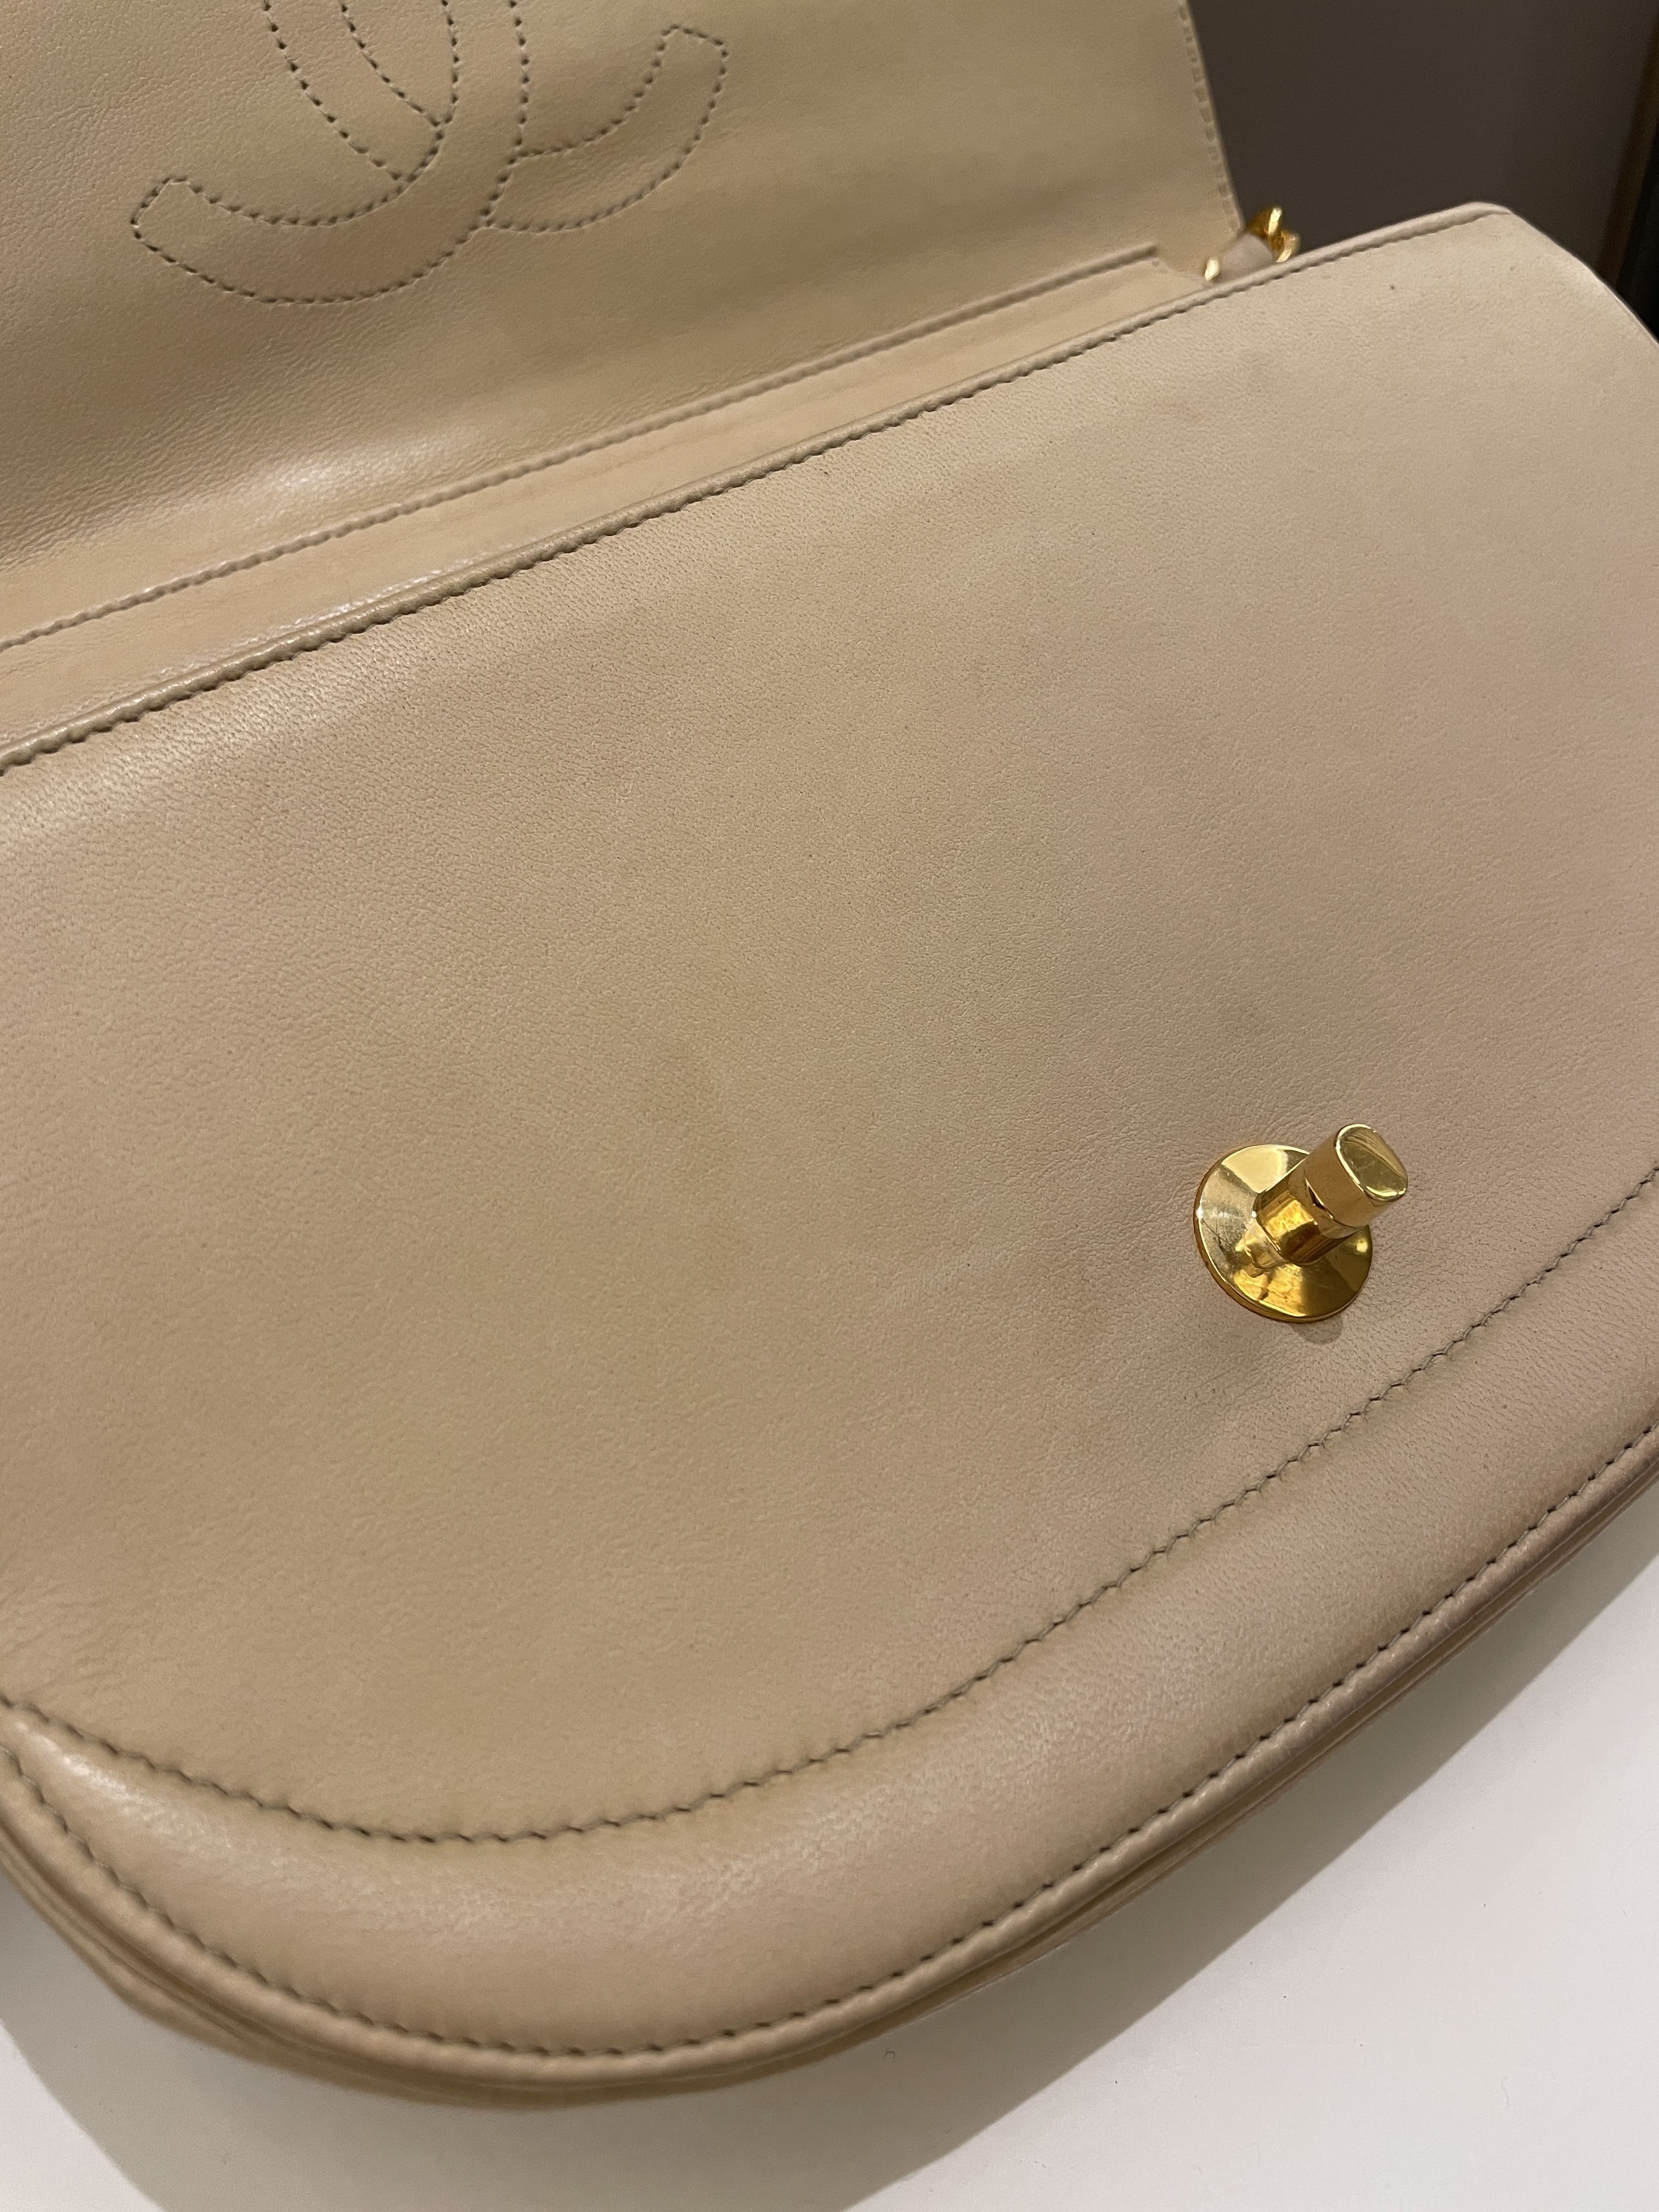 Chanel Vintage Half Moon Flap Bag Beige Lambskin